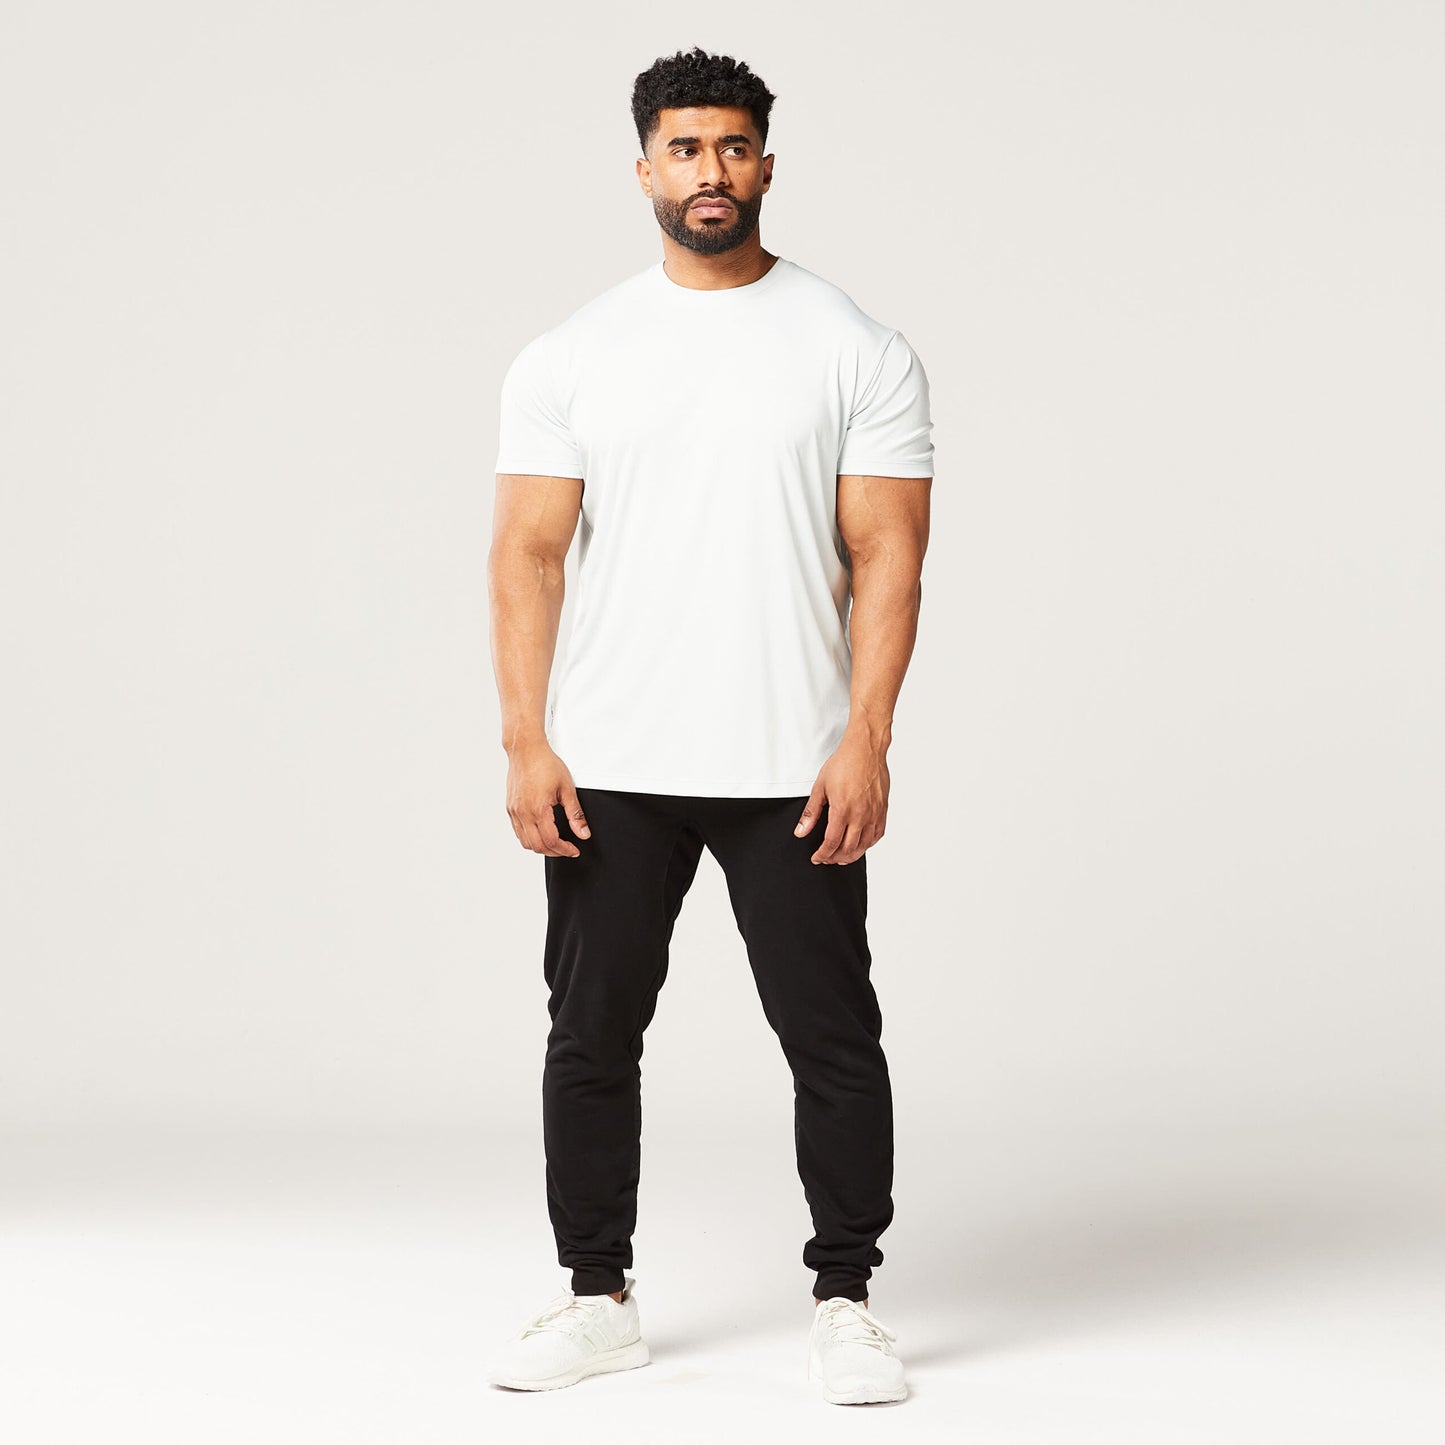 squatwolf-gym-wear-code-urban-tee-grey-workout-shirts-for-men